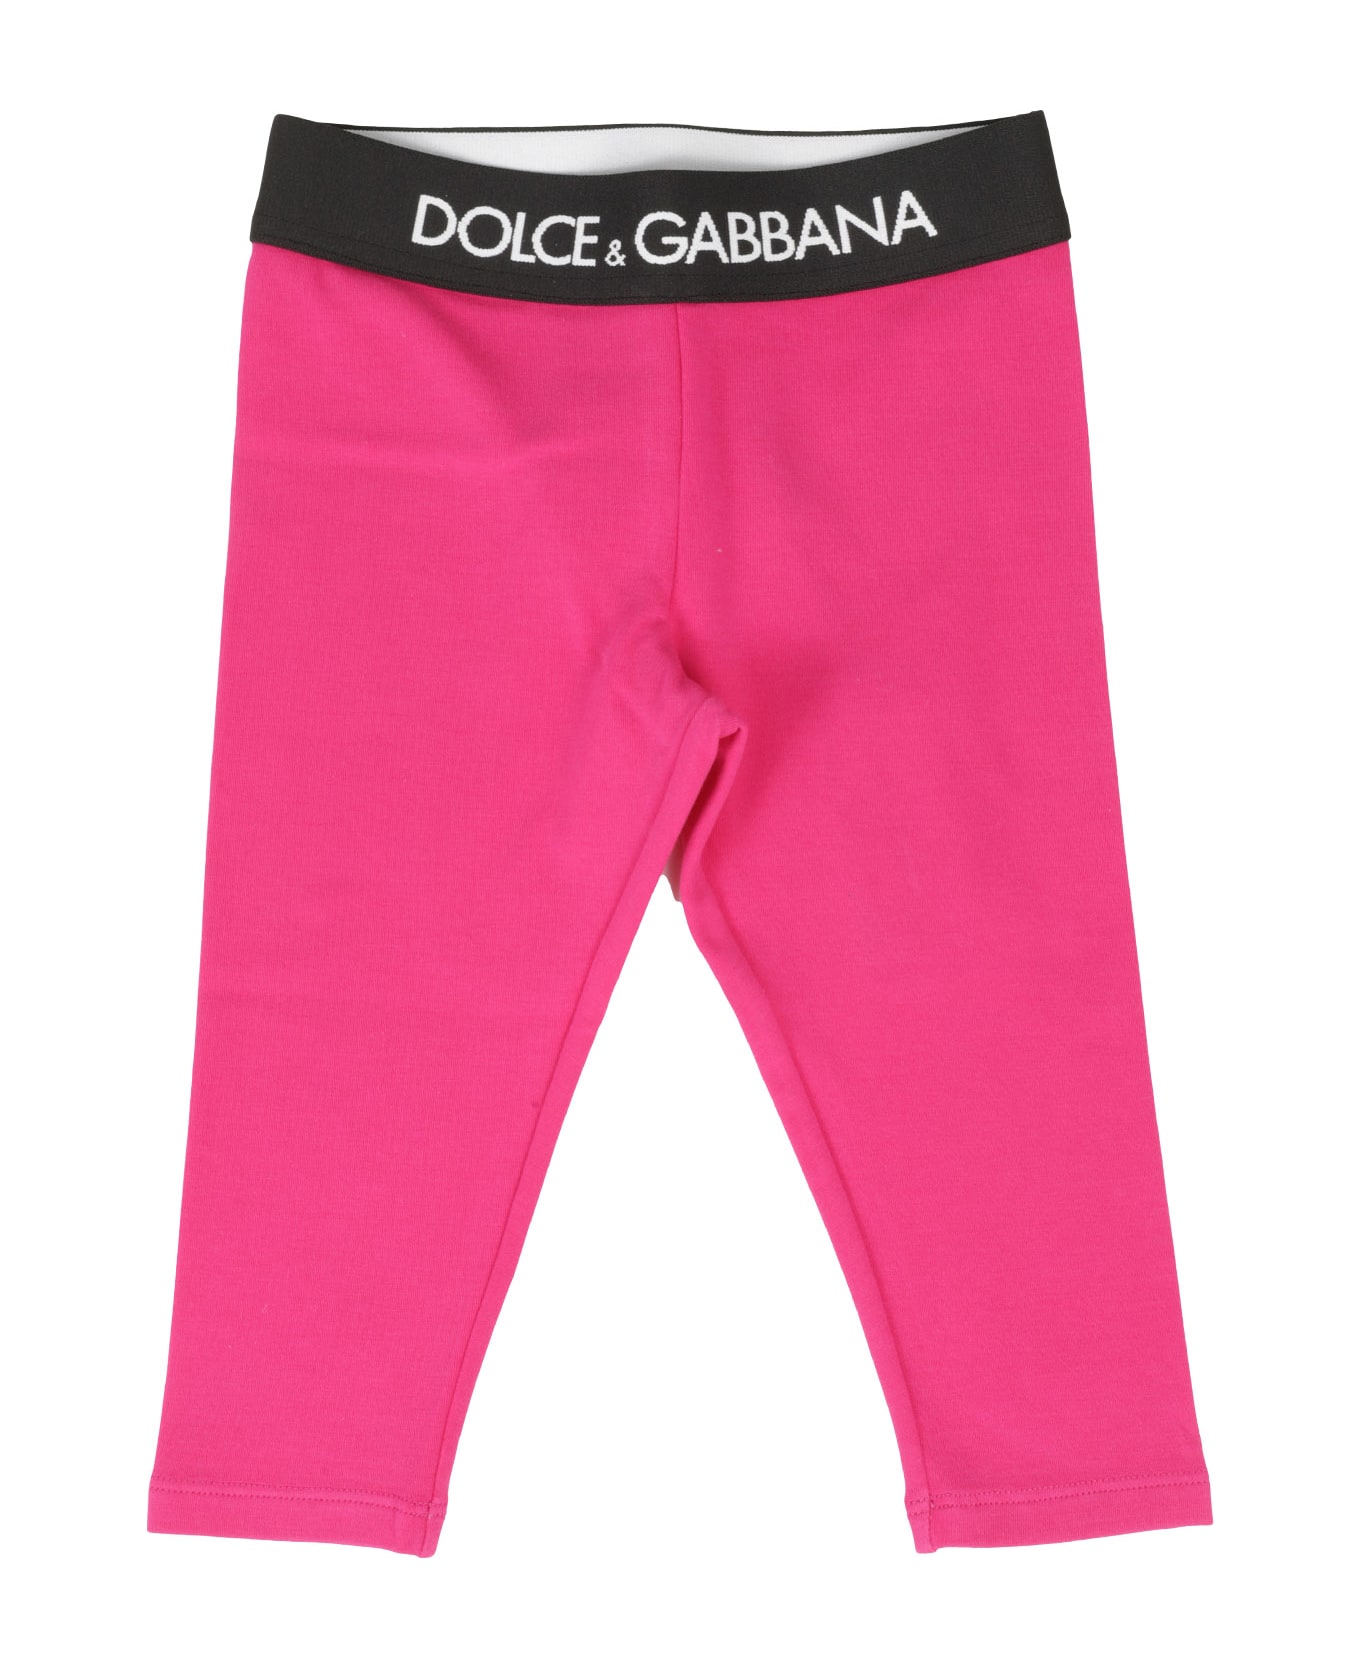 Dolce & Gabbana Leggings - Ciclamino